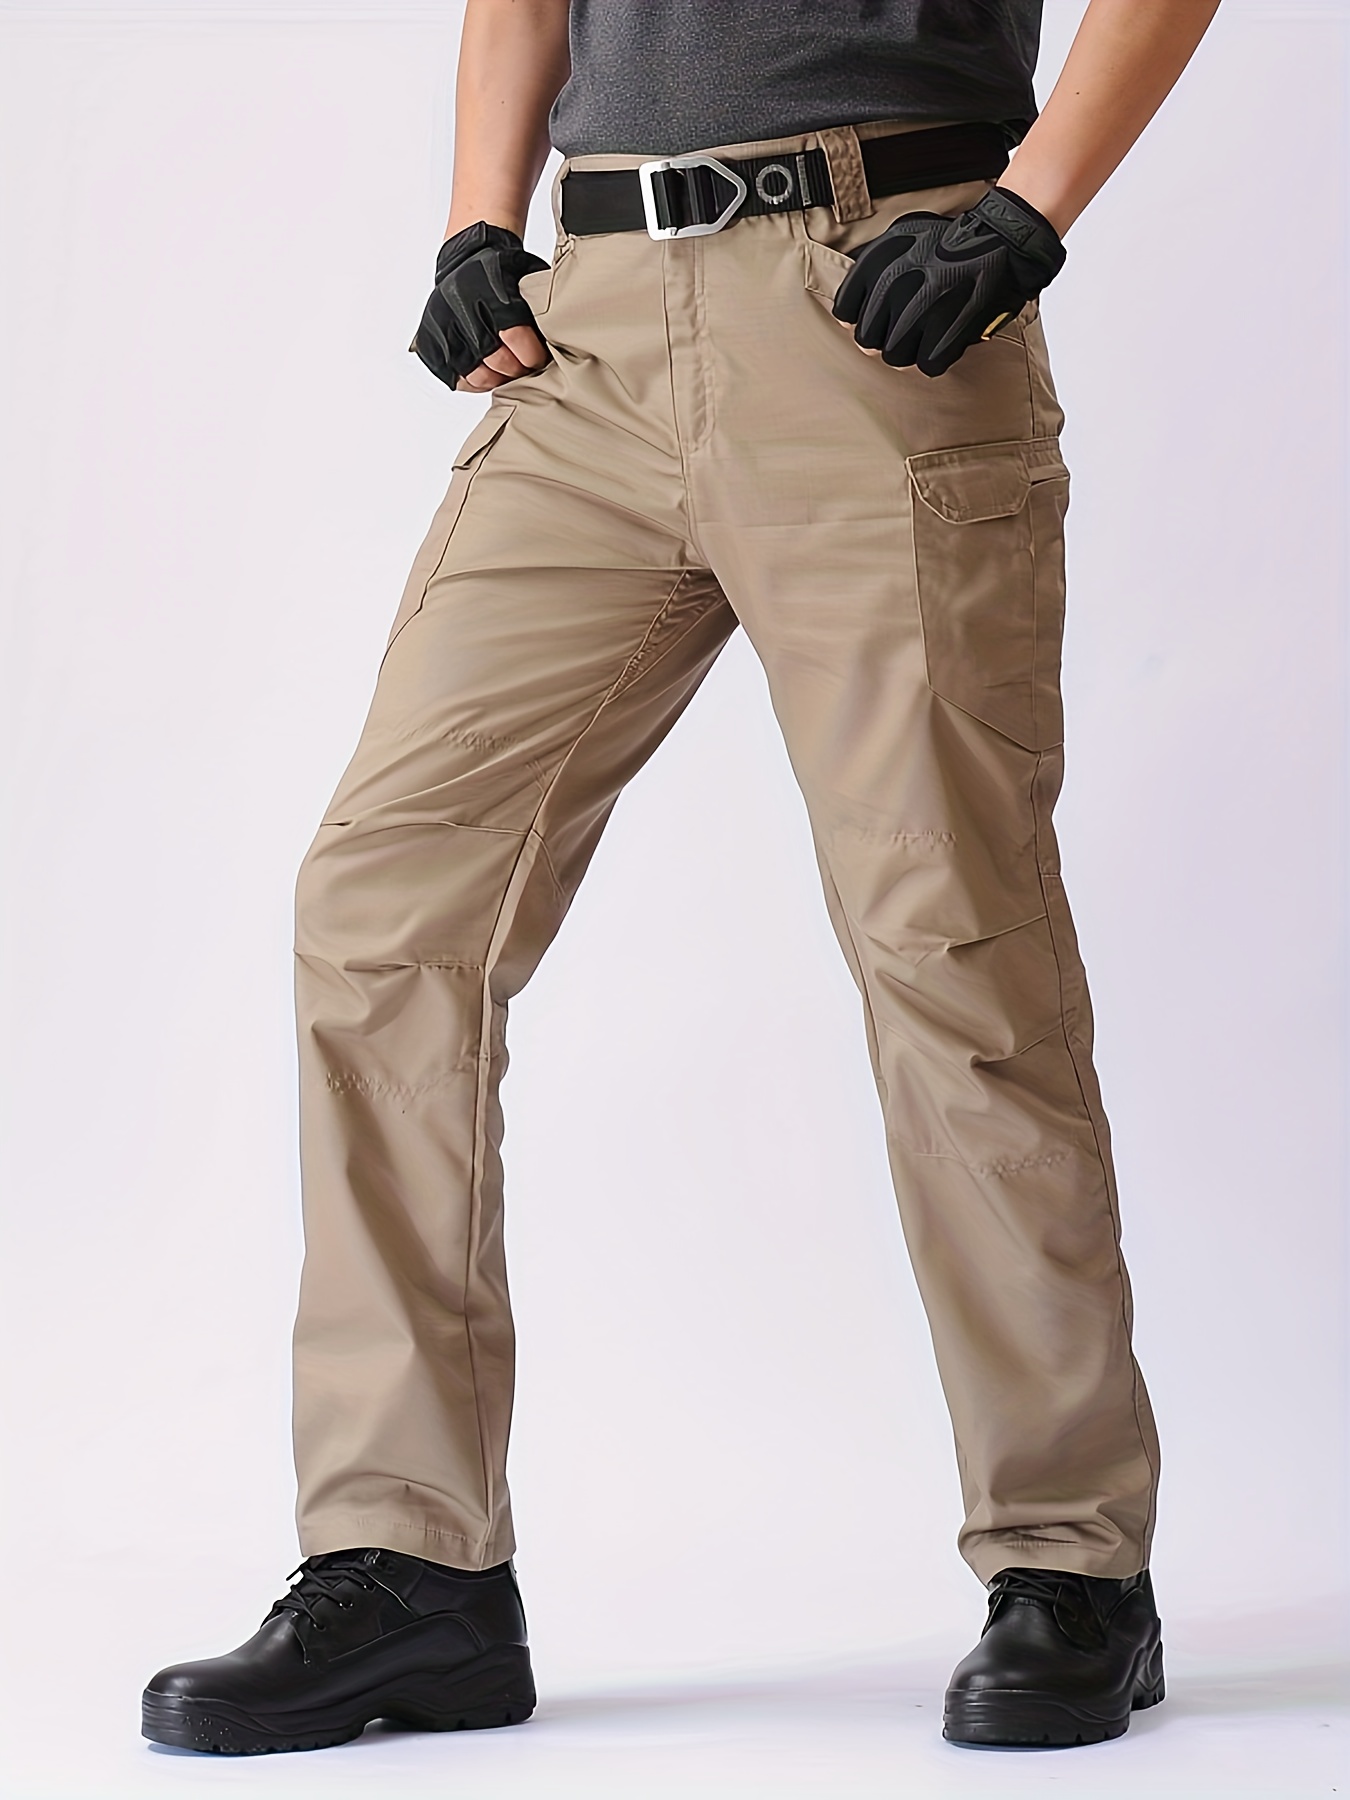 26,36 US$-Pantalones tácticos hombres ejército Cargo Joggers